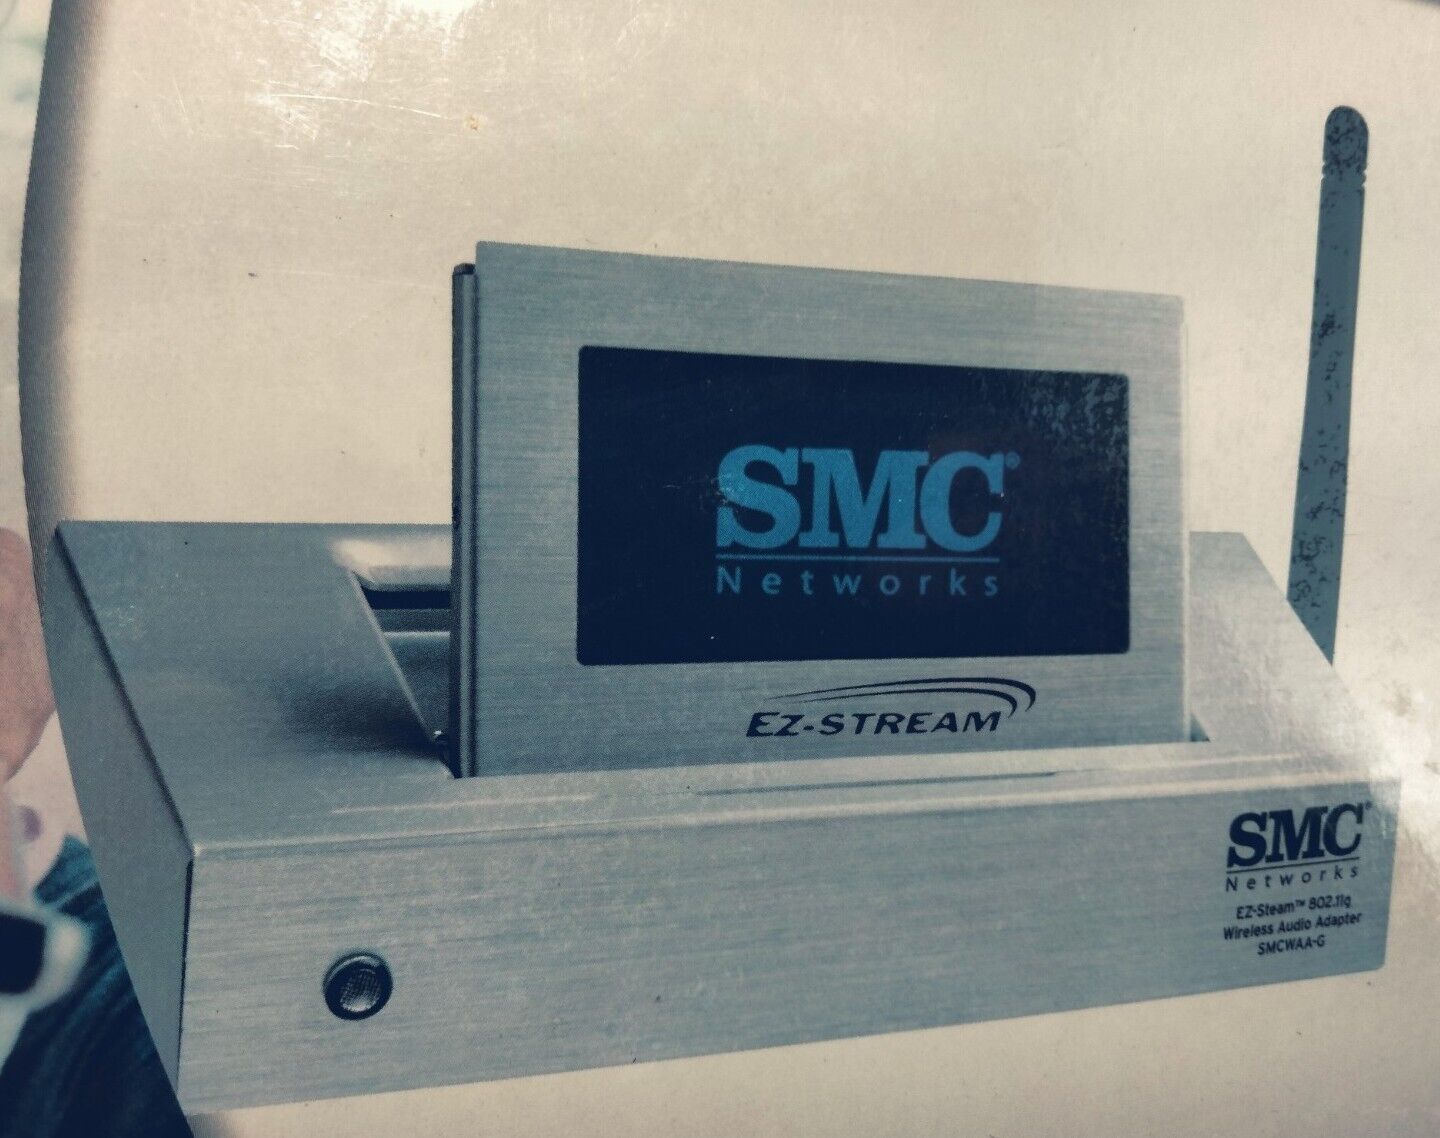 SMC Wireless Audio Adapter 802.11g 54Mbps - New